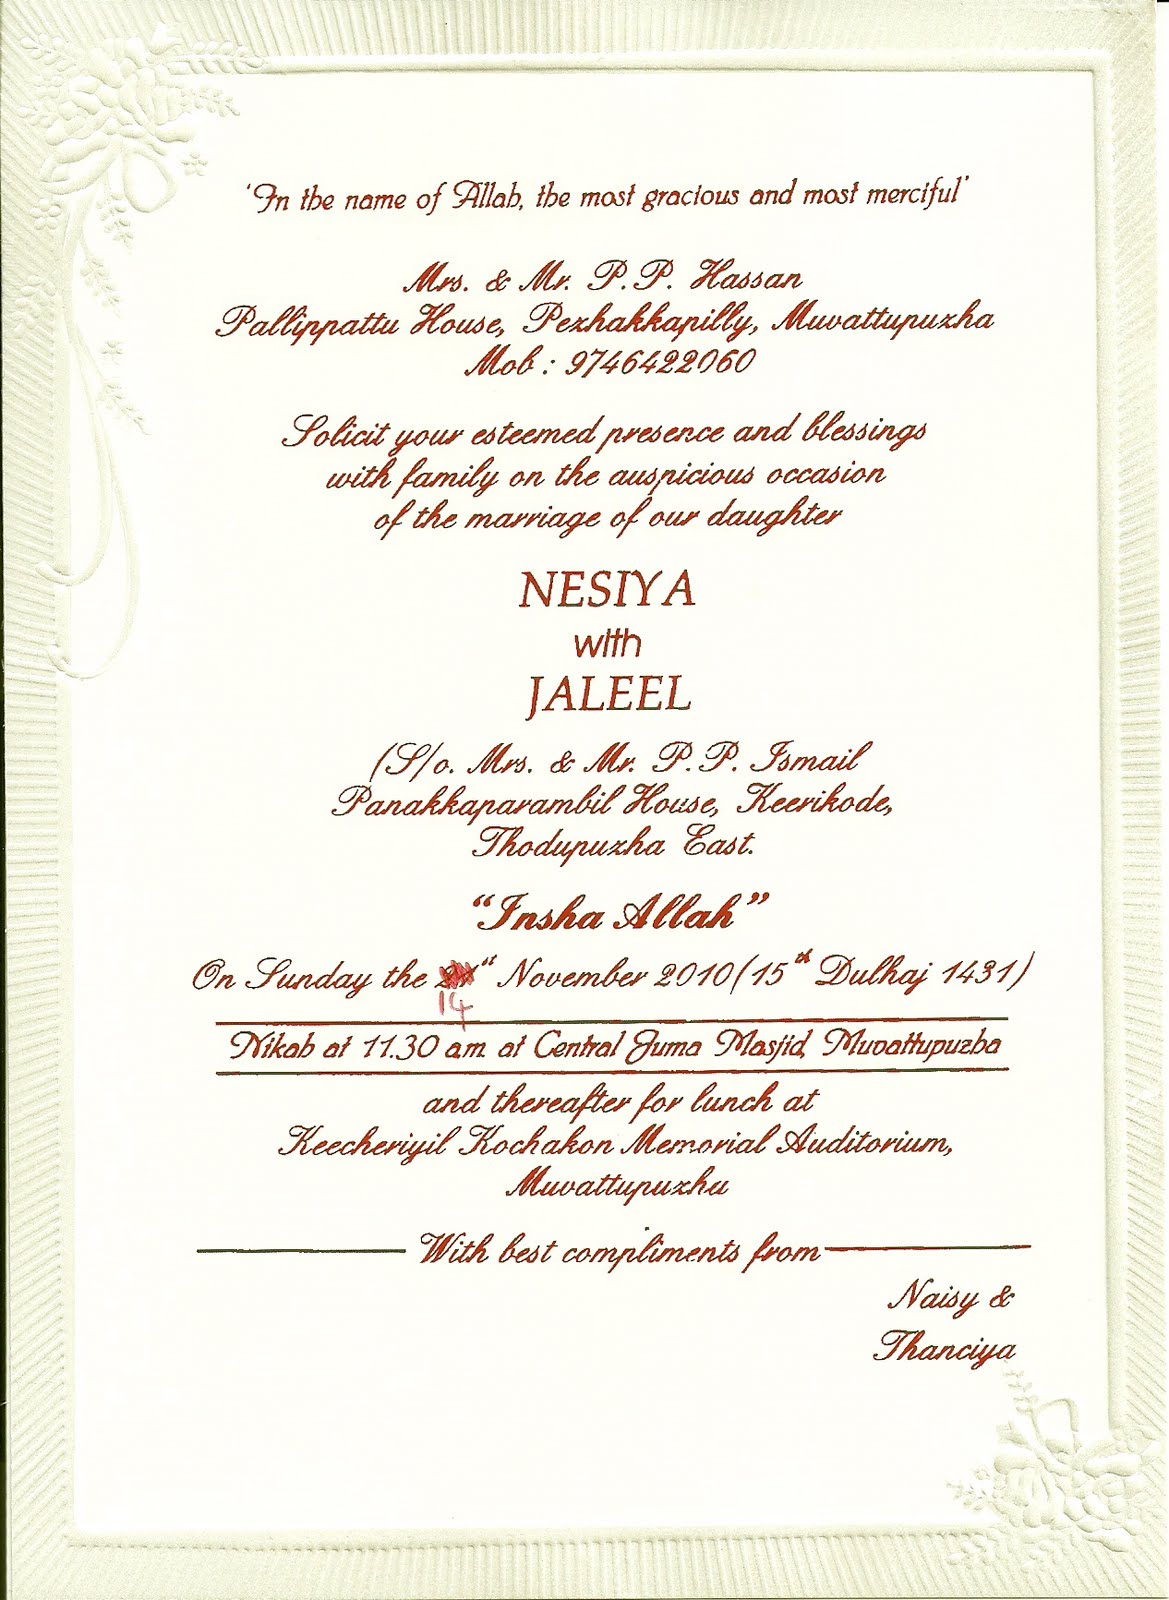 christian wedding invitation cards